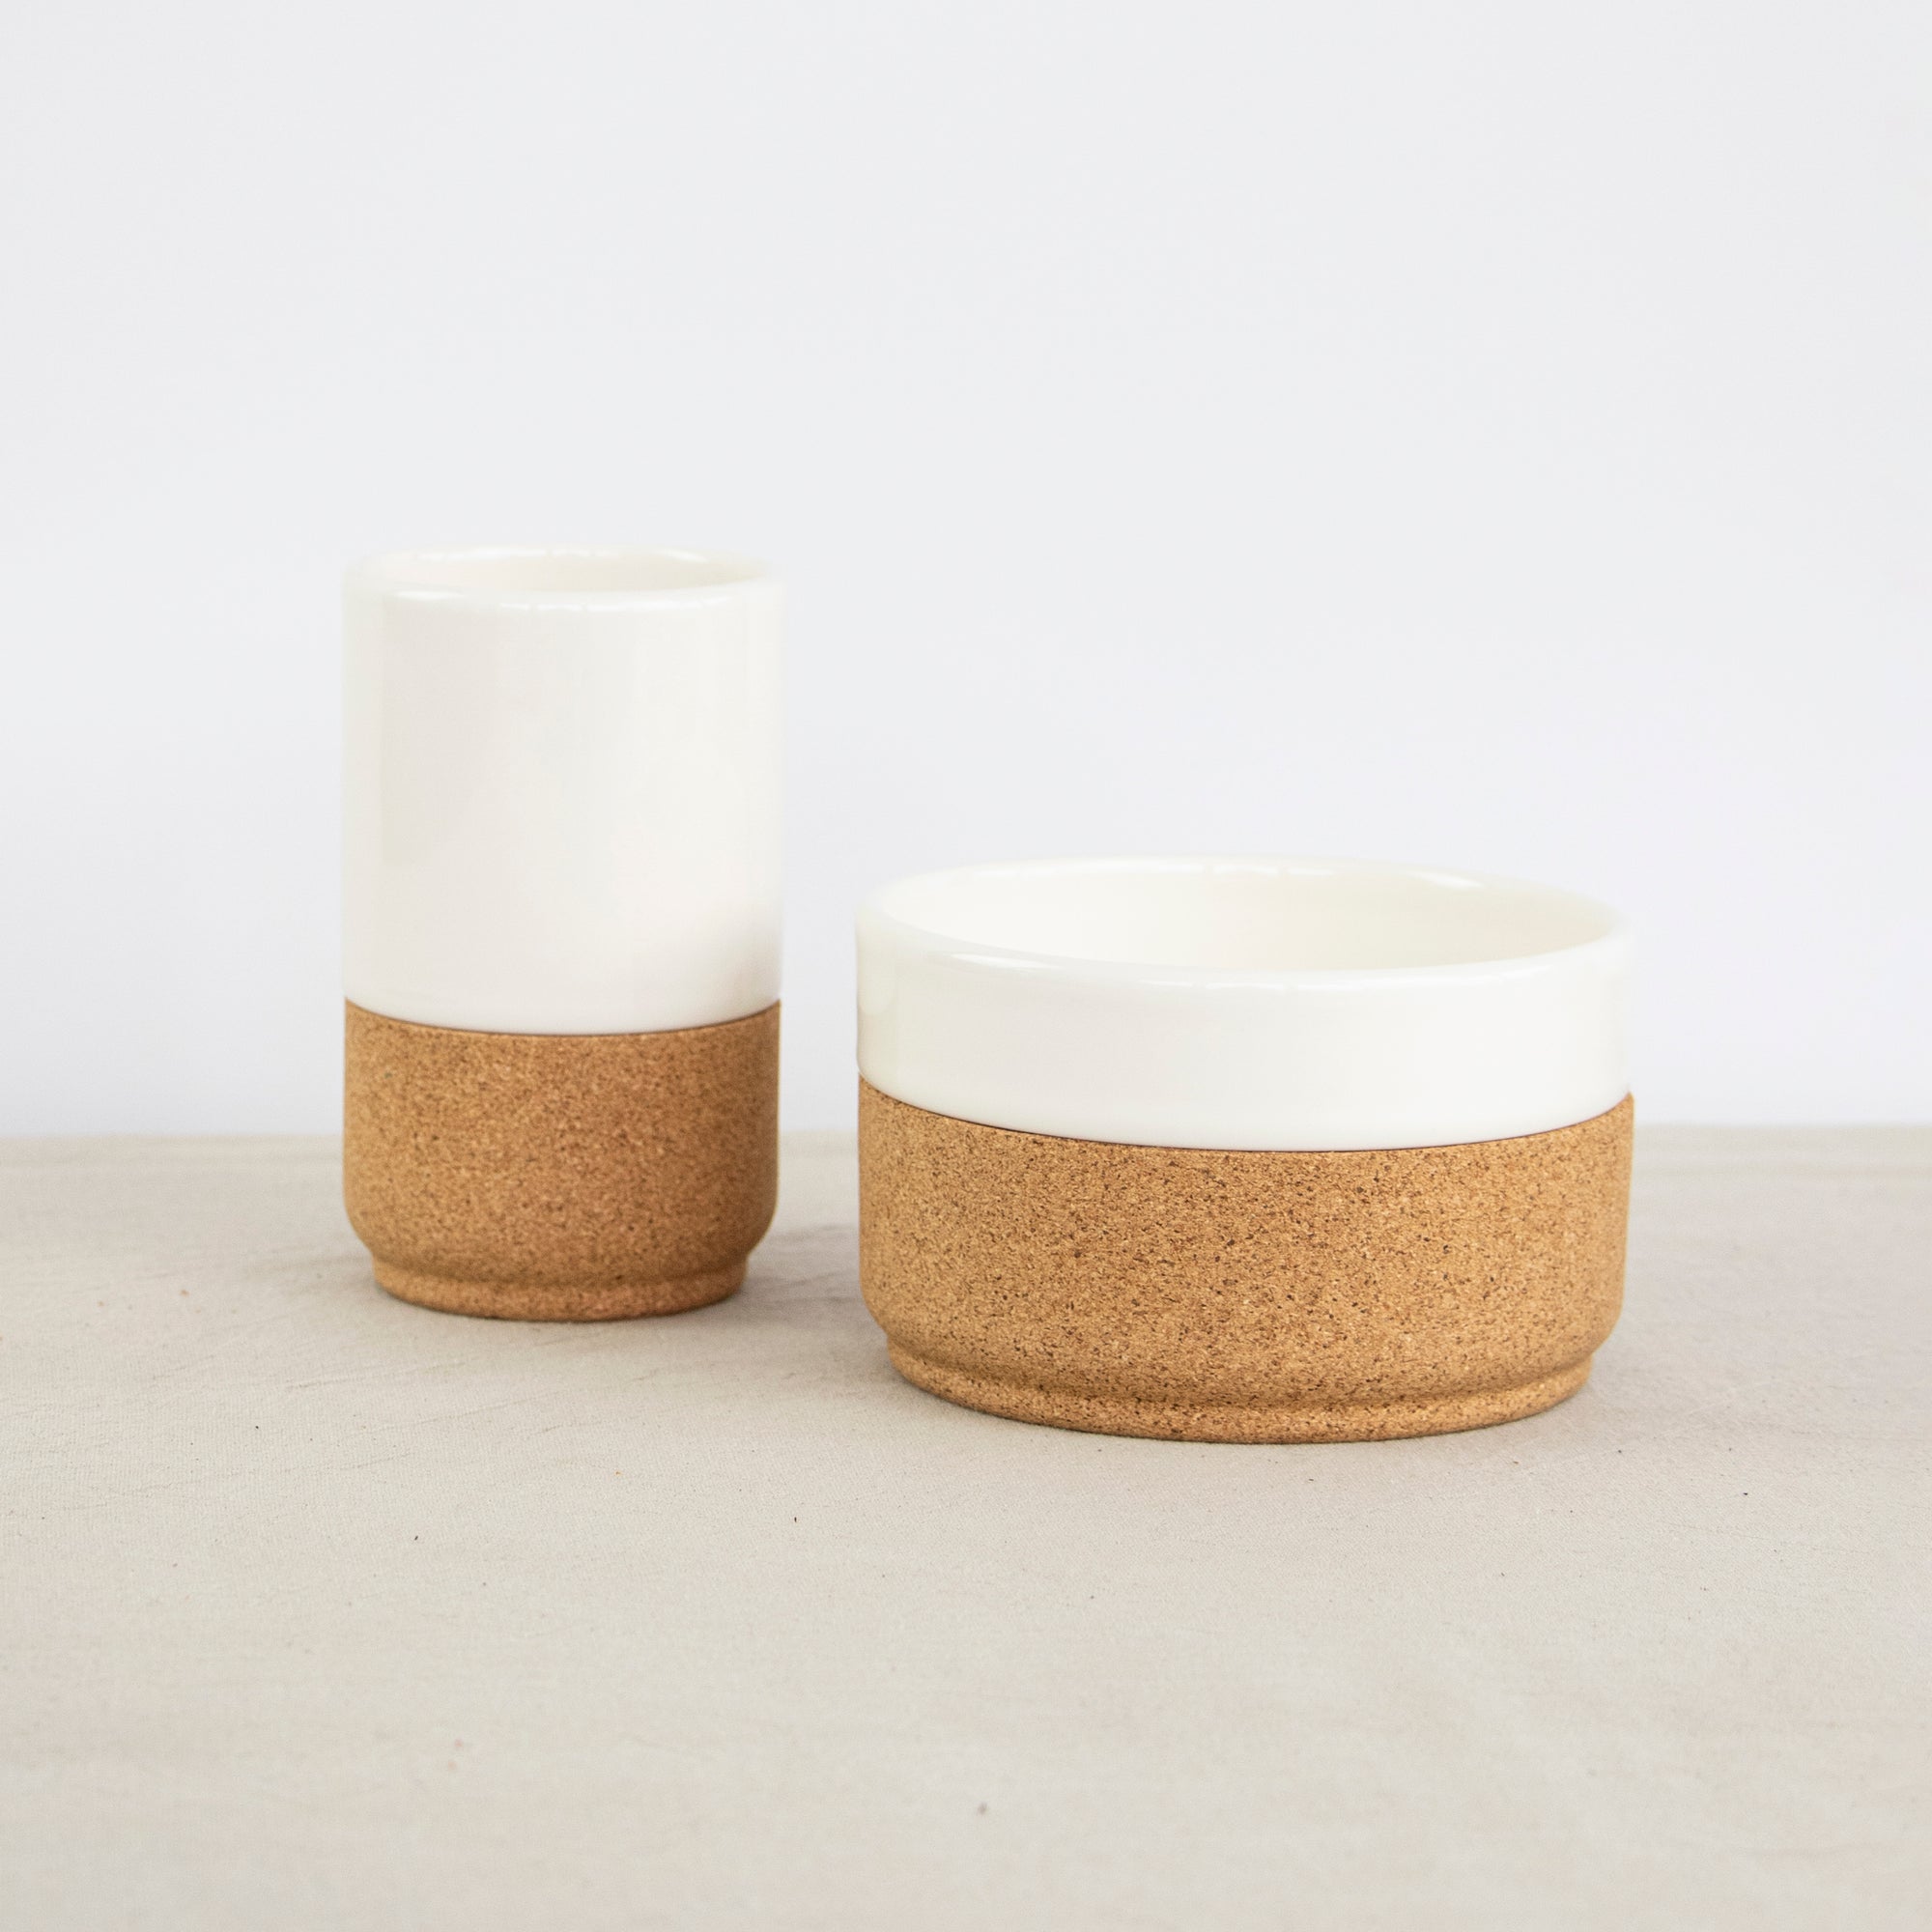 Breakfast gift set | Large coffee mug + bowl- cream